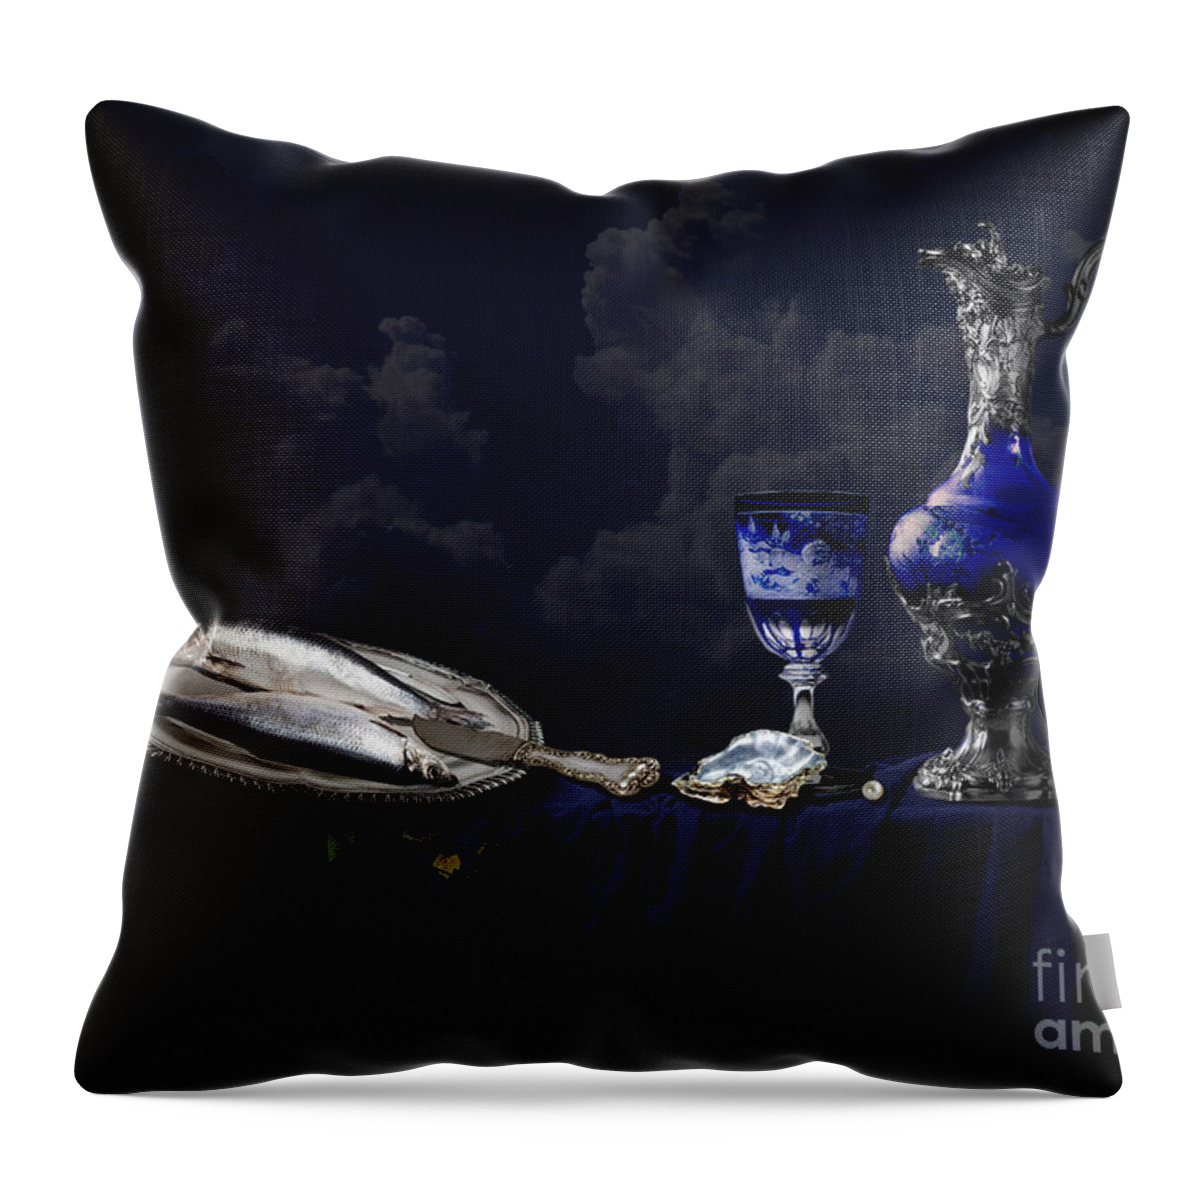 Still Life Throw Pillow featuring the digital art Still life in blue by Alexa Szlavics